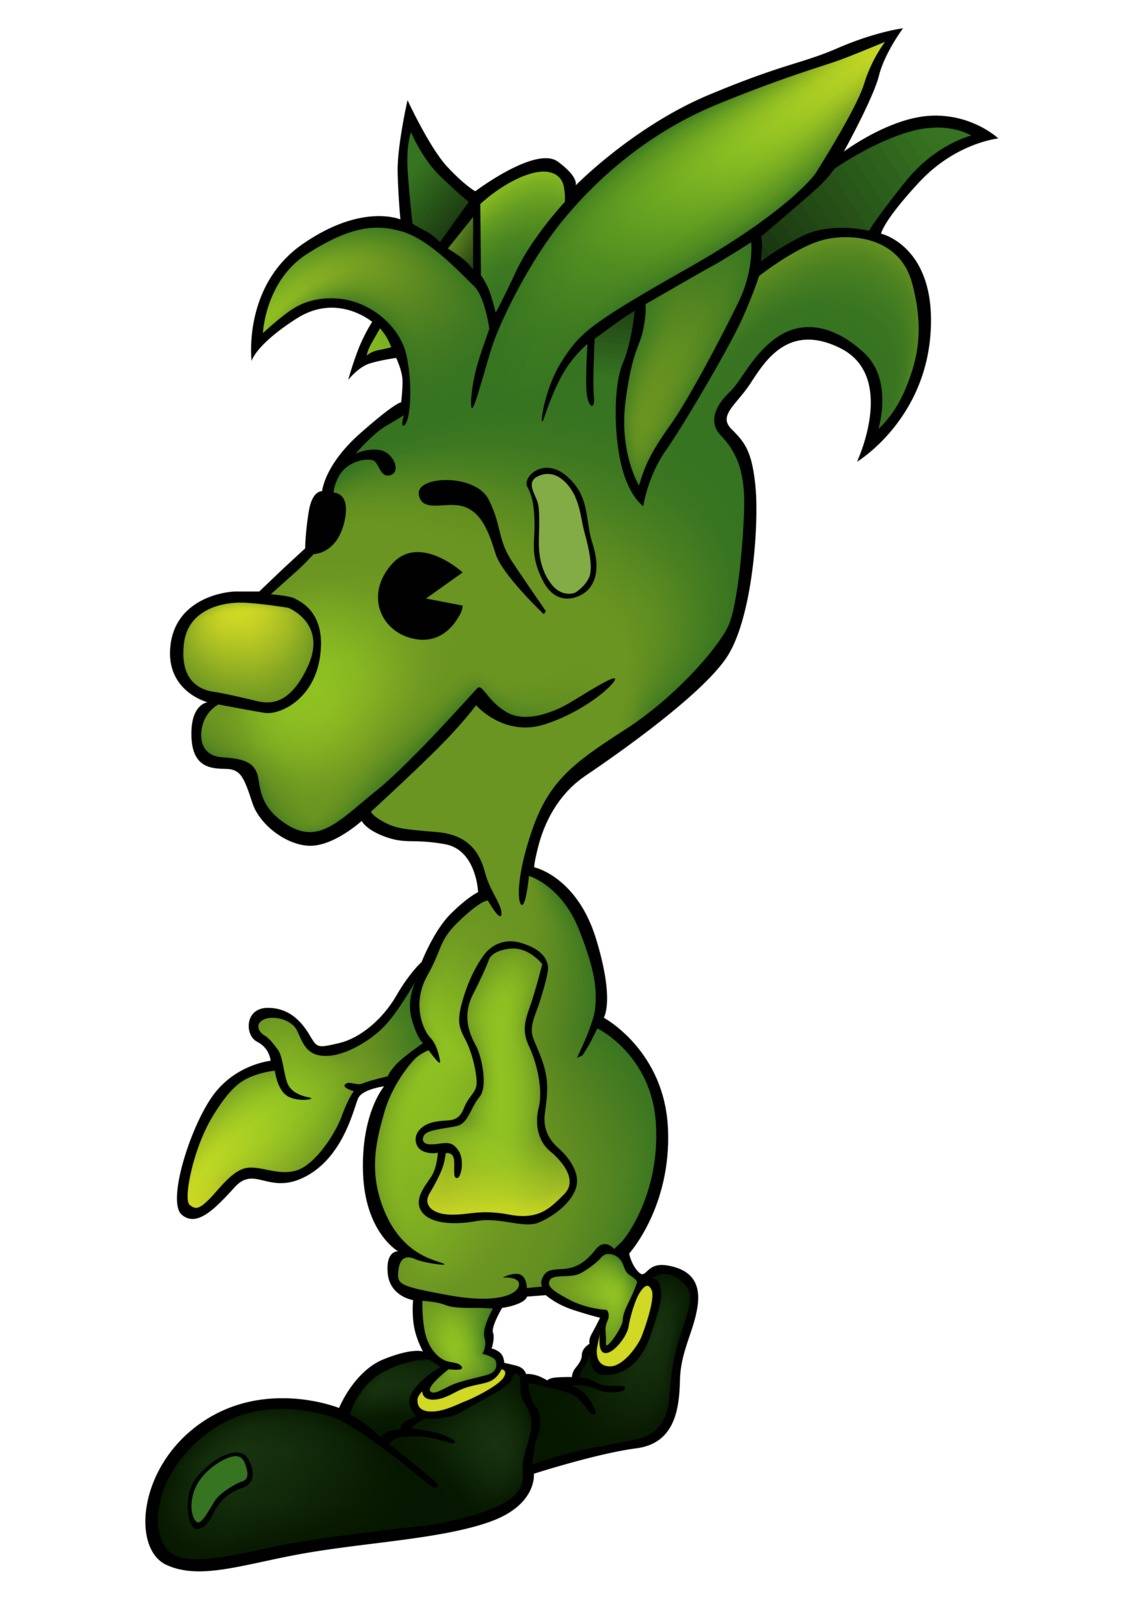 Green Character by illustratorCZ